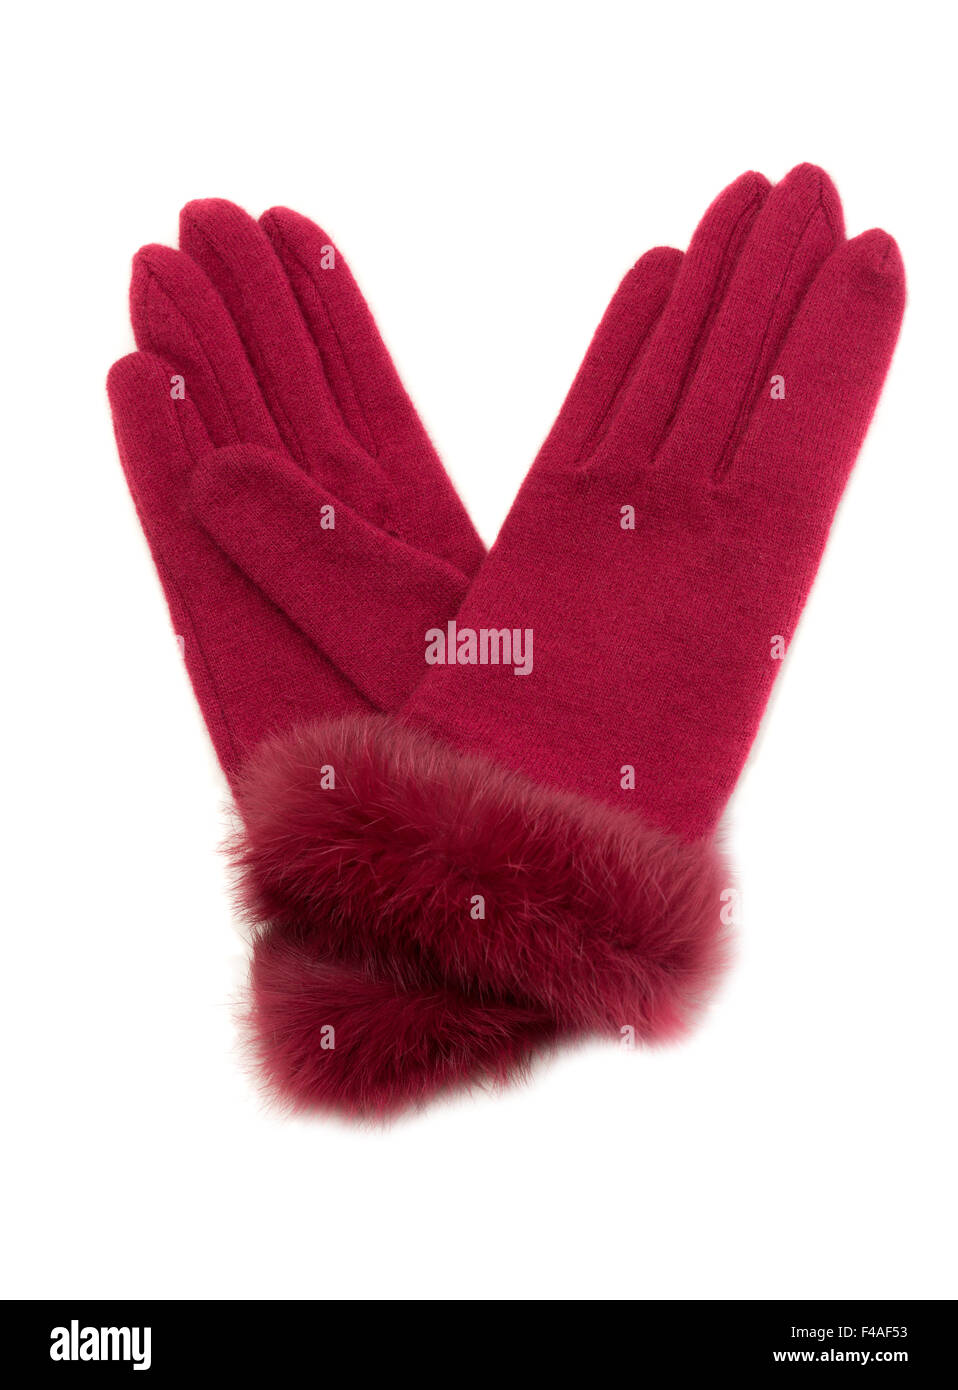 Crimson warme Damen Handschuhe mit Fell. Stockfoto